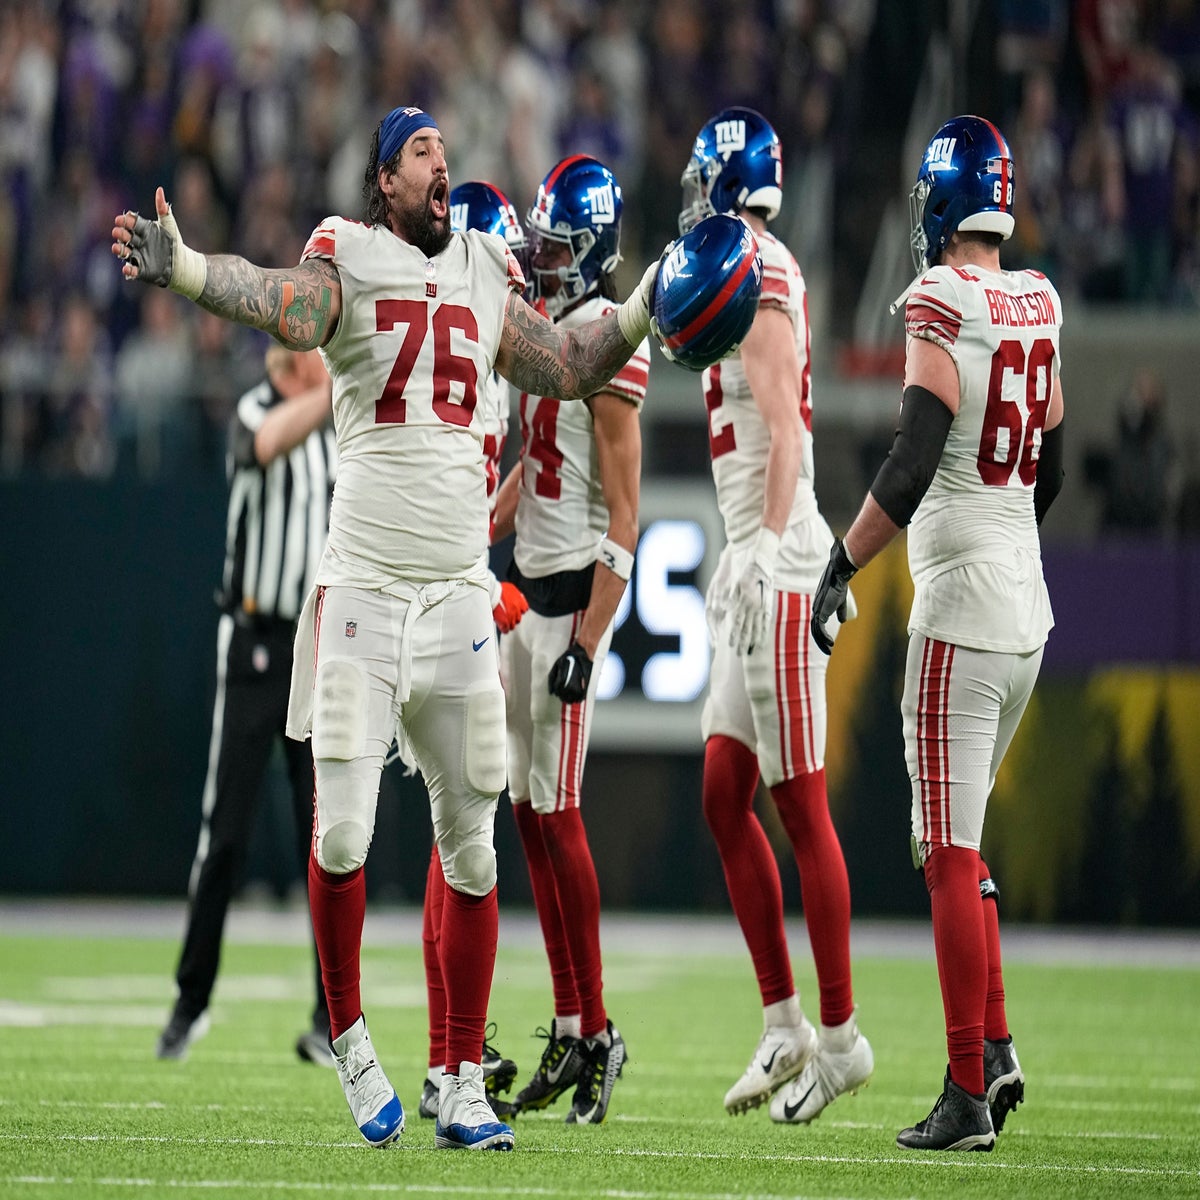 New York Giants 31-24 Minnesota Vikings: Daniel Jones inspires Giants to  first playoff win in 11 years, NFL News